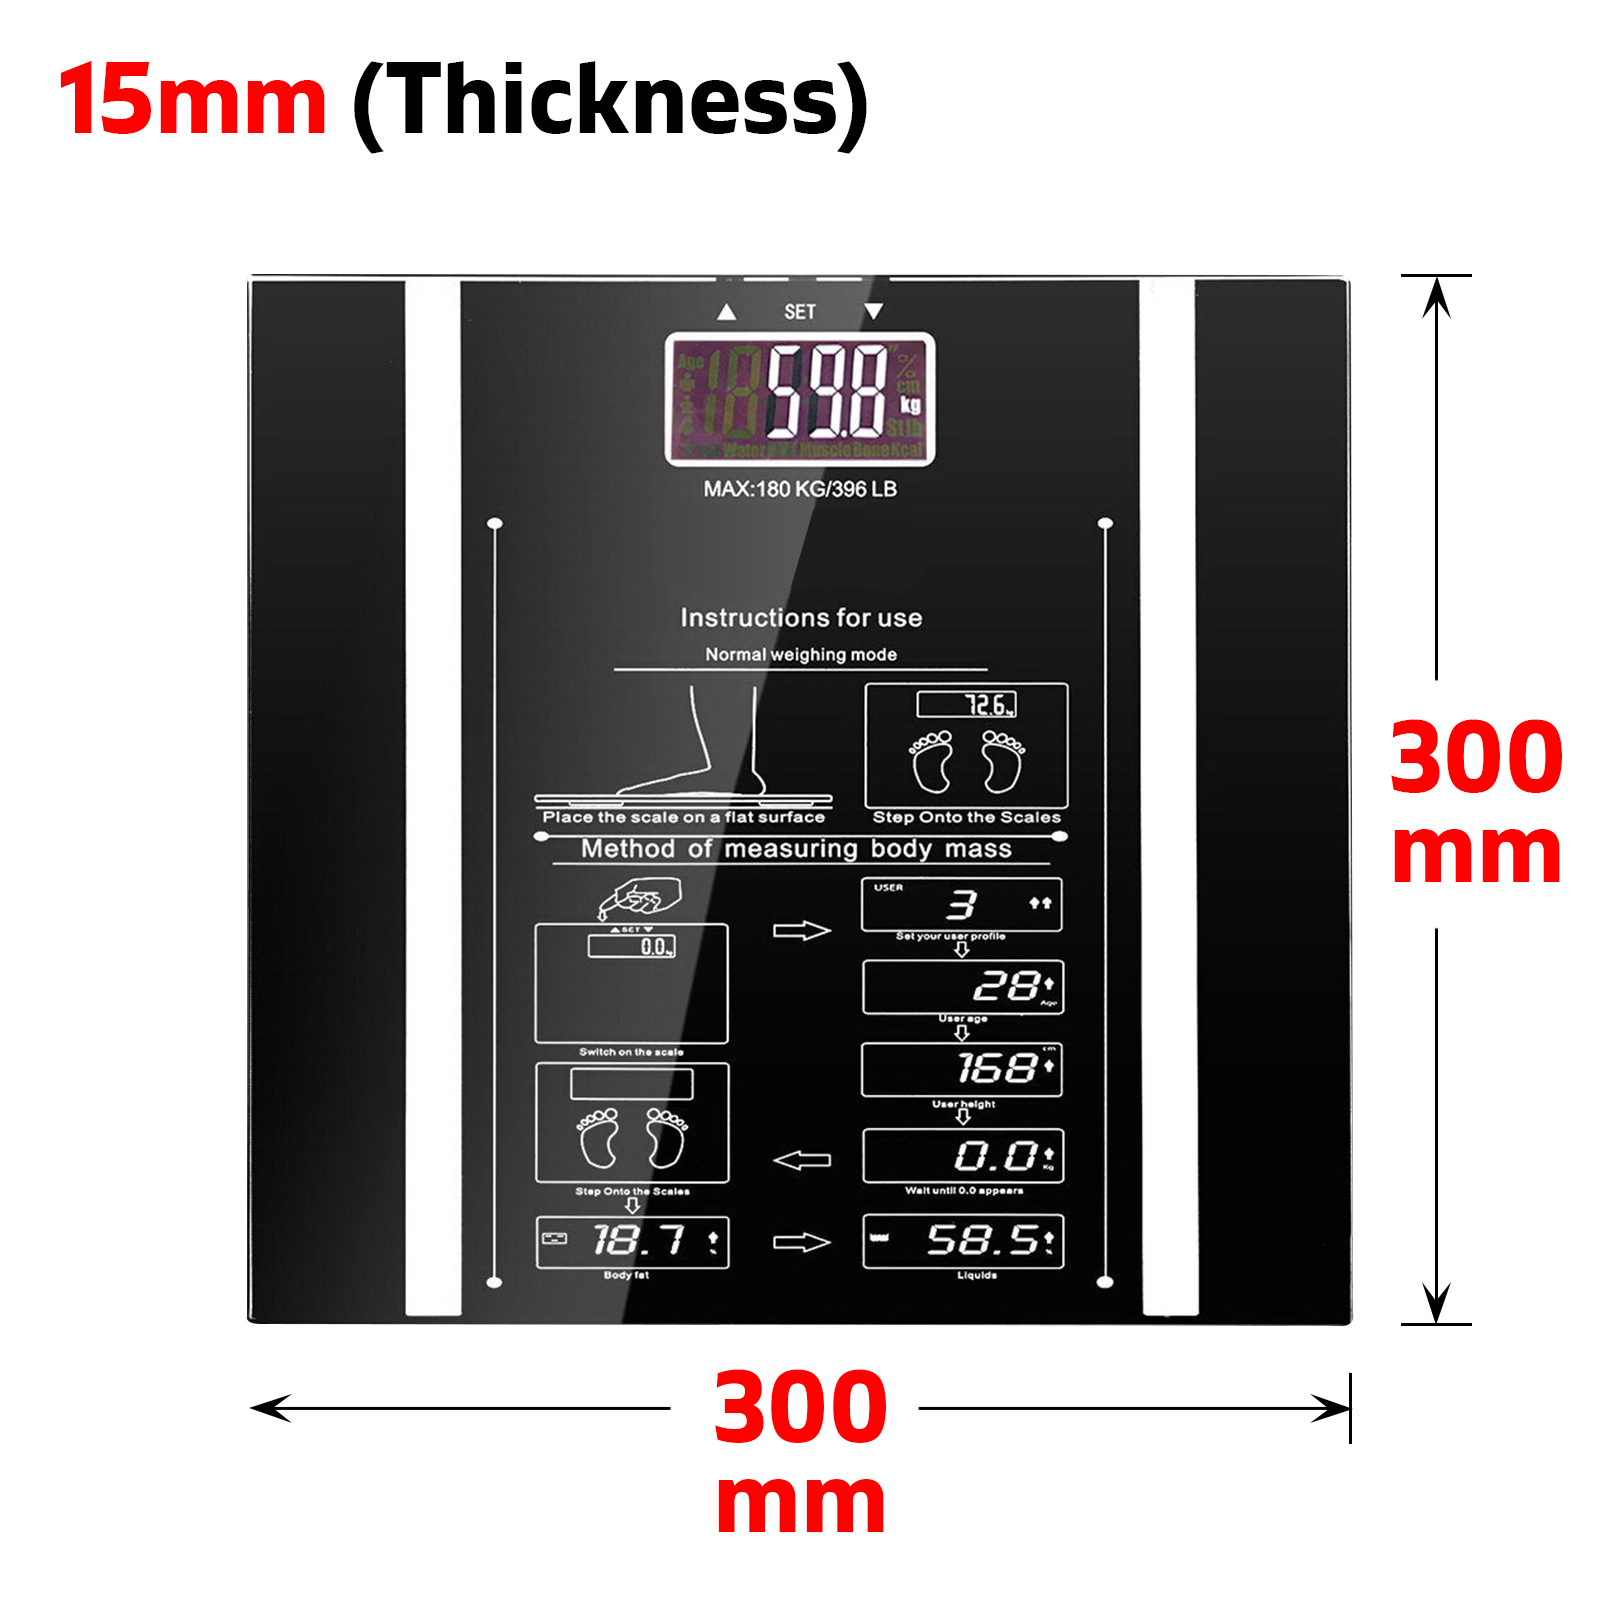 Electronic Digital Body Fat Bathroom Glass Weight Scale High Accuracy - Black